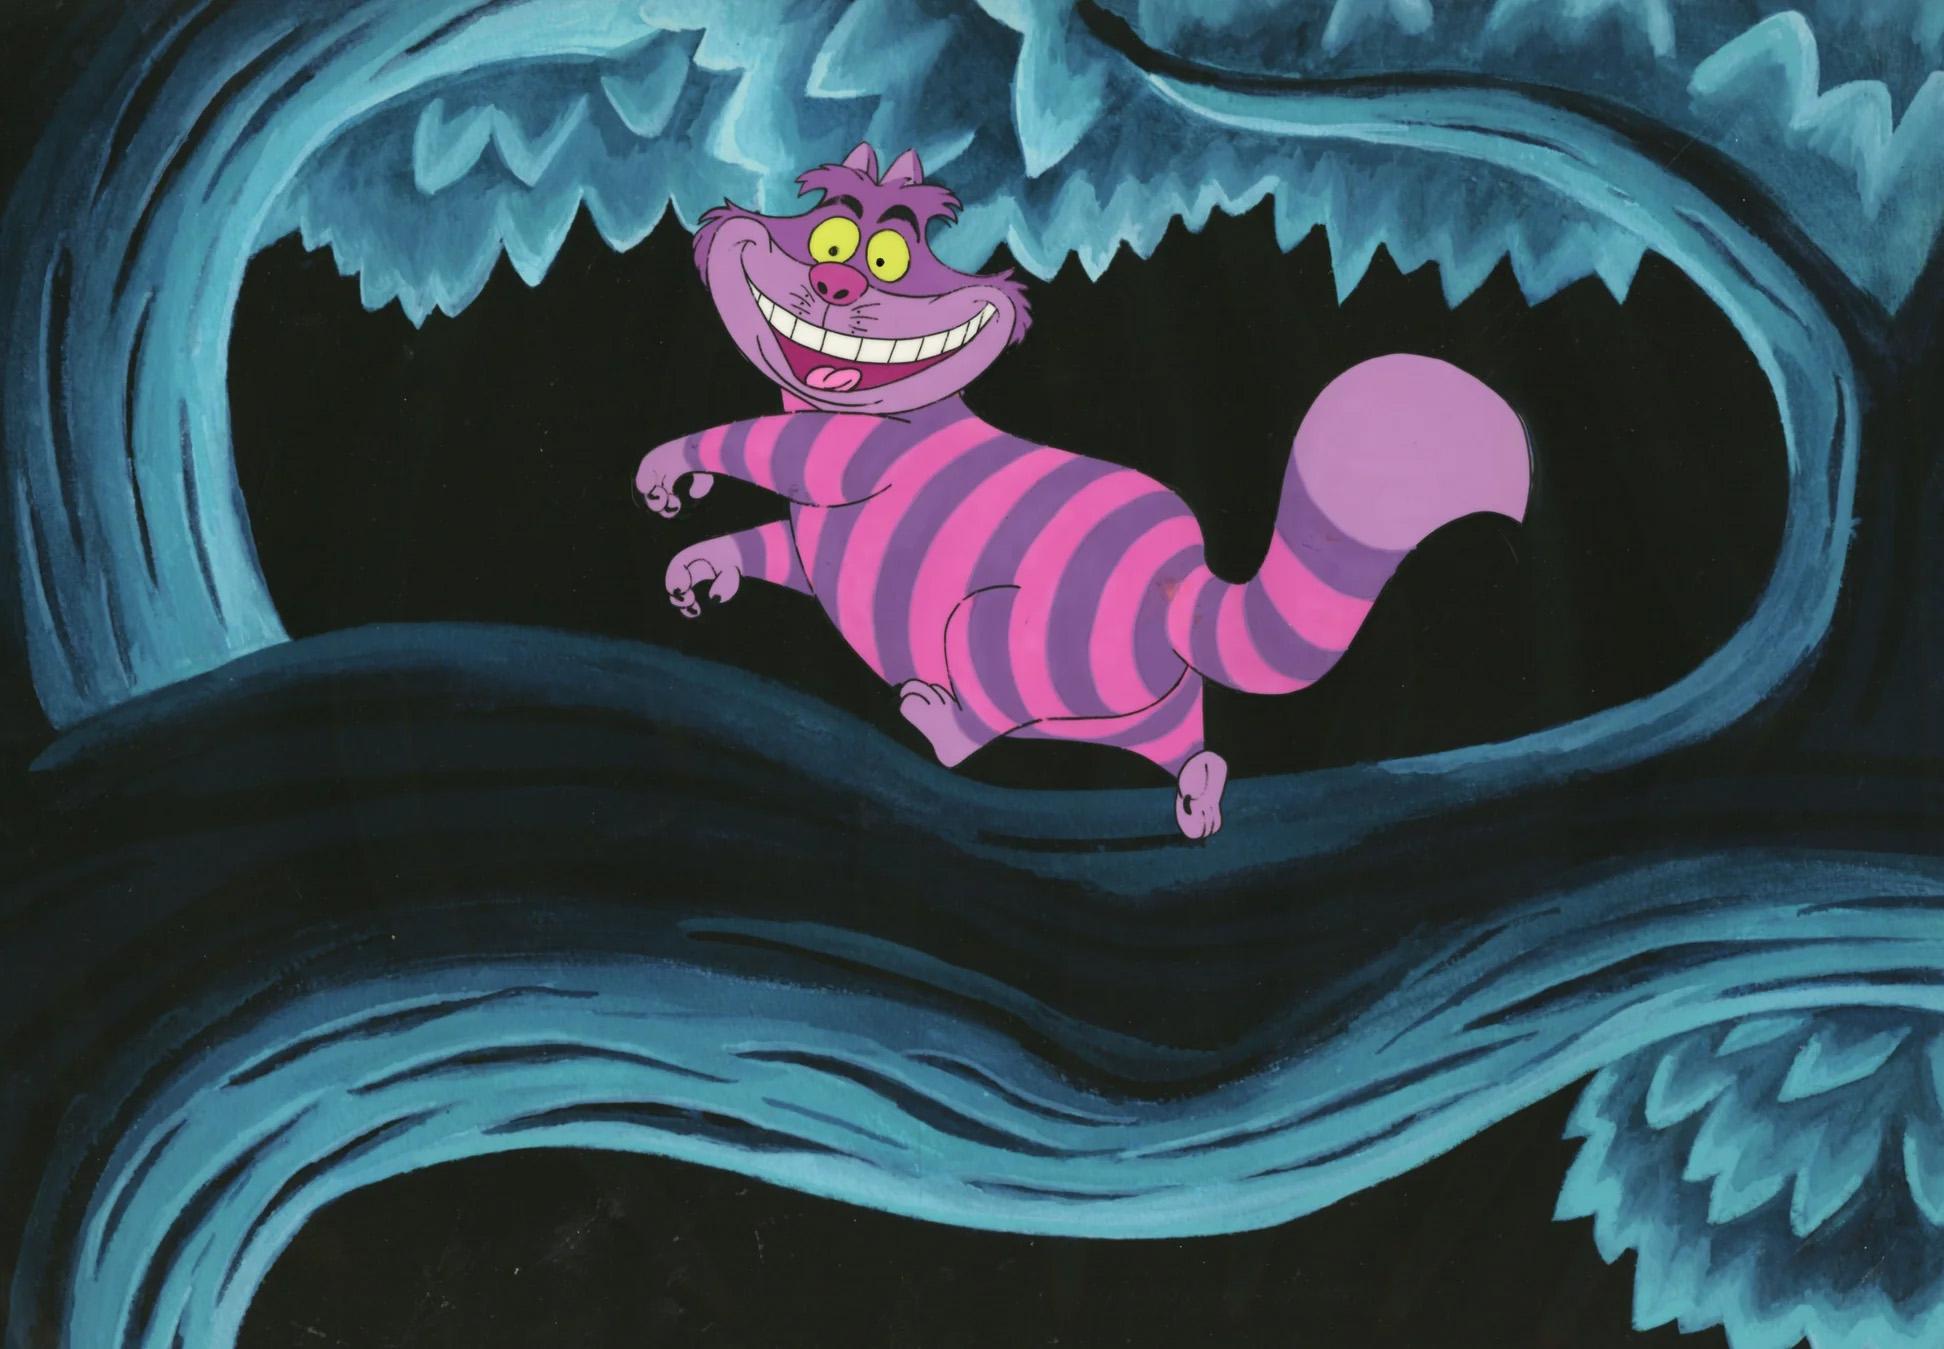 Alice in Wonderland Original Production Cel: Cheshire Cat - Art by Walt Disney Studio Artists